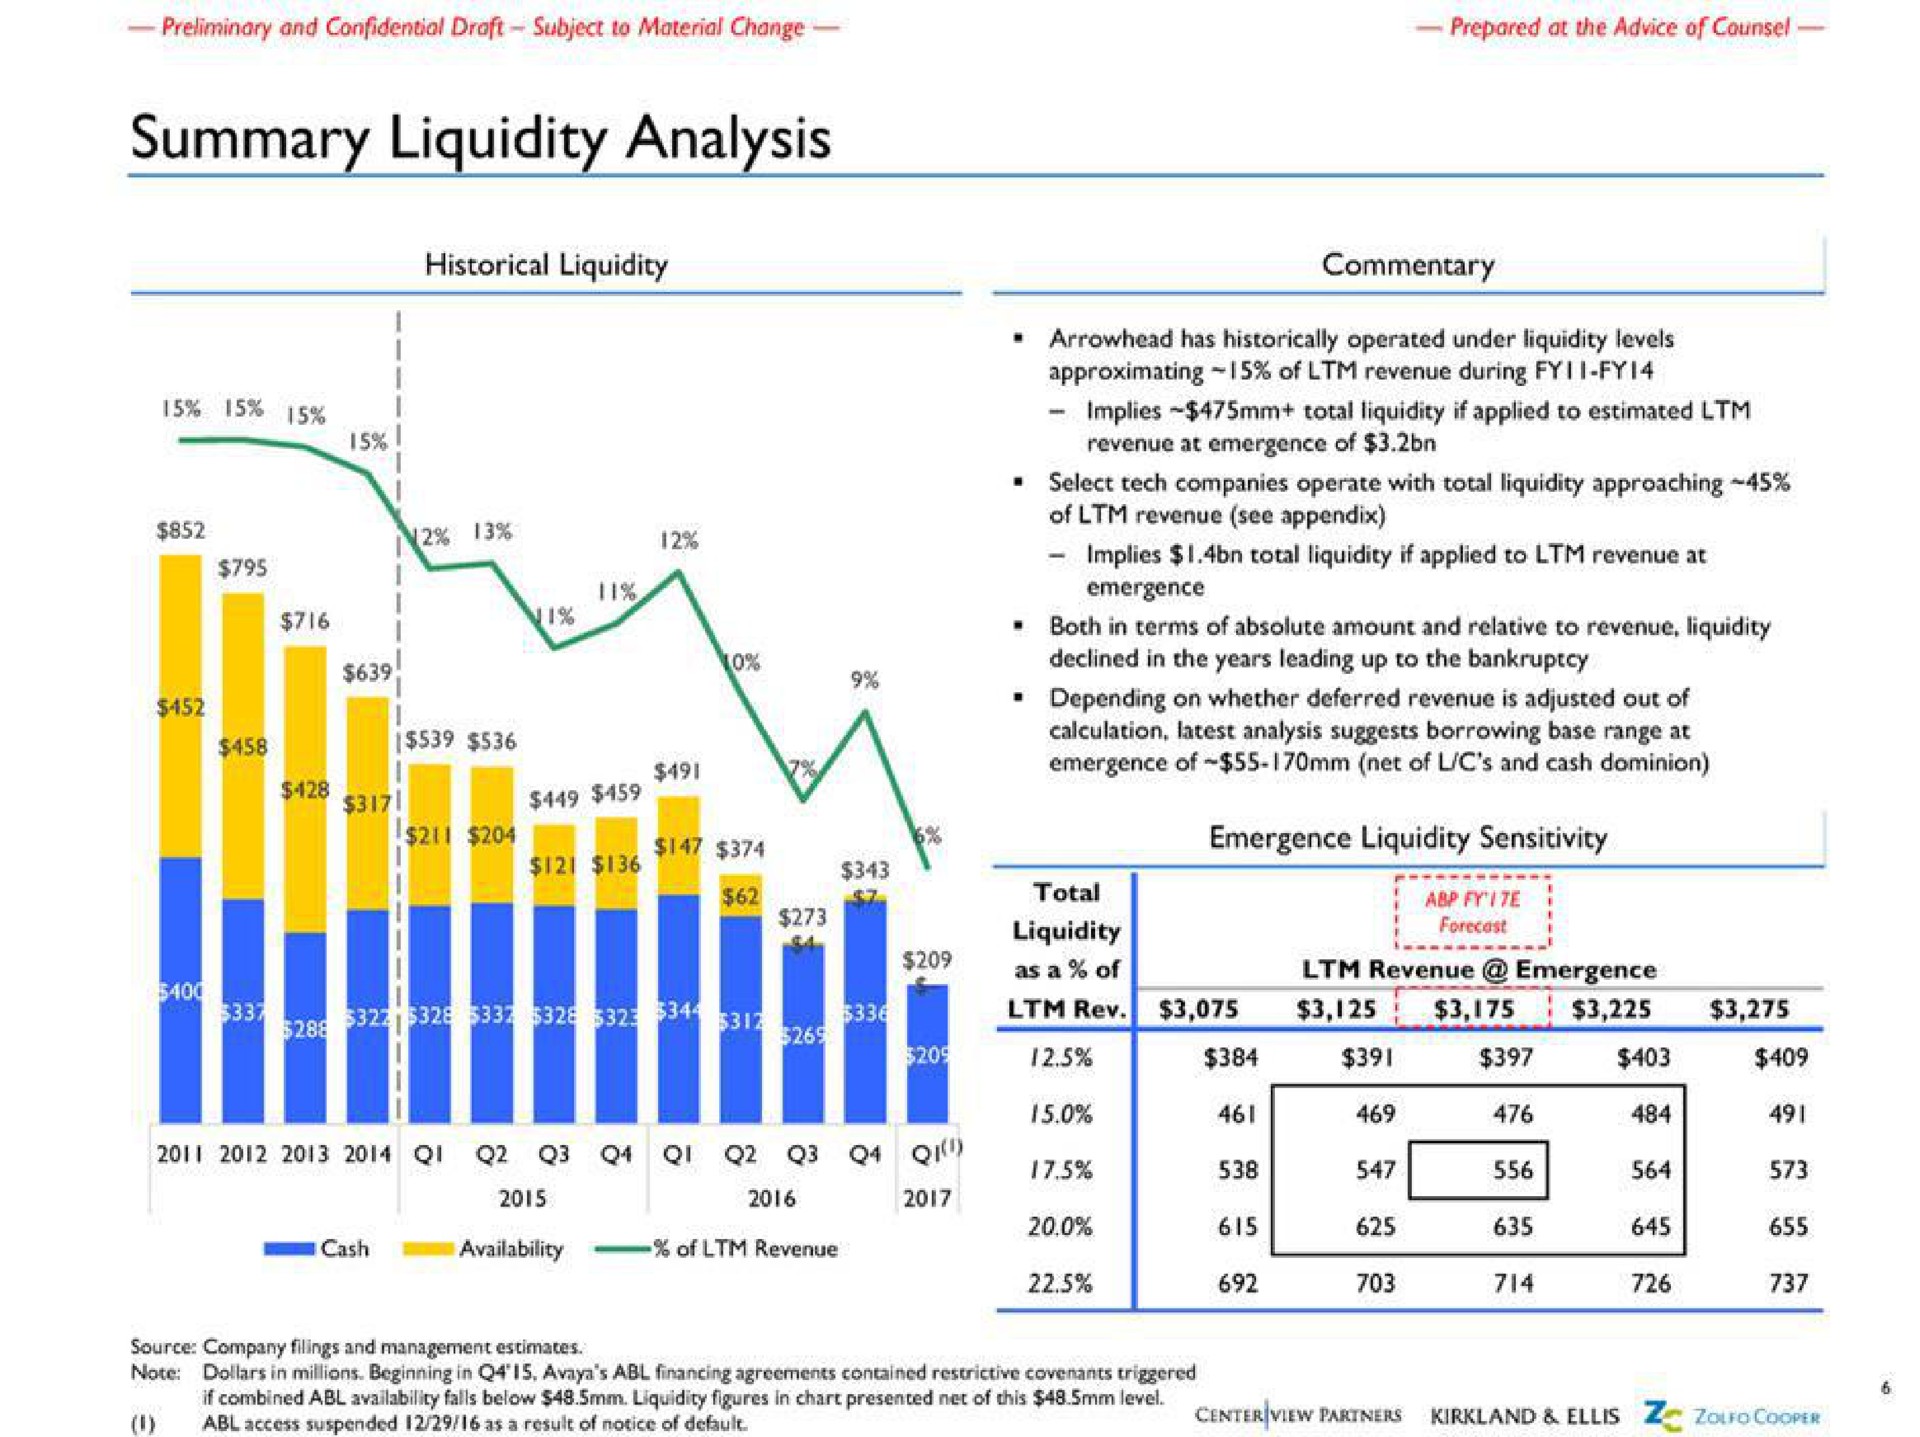 summary liquidity analysis total liquidity forecast | Centerview Partners